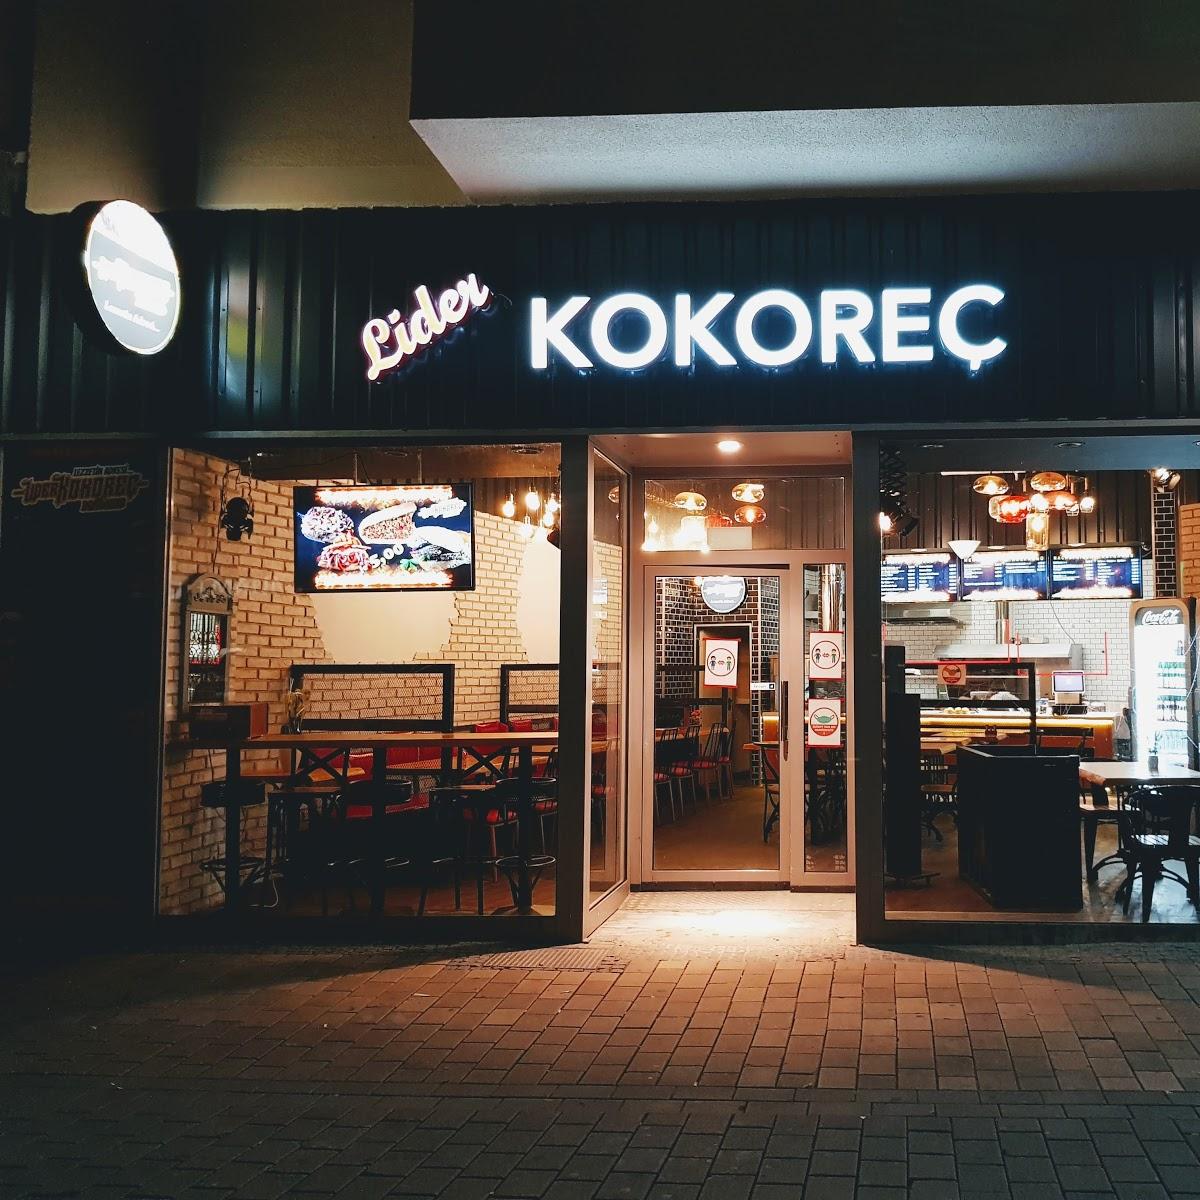 Restaurant "Lider Kokorec Dortmund" in Dortmund